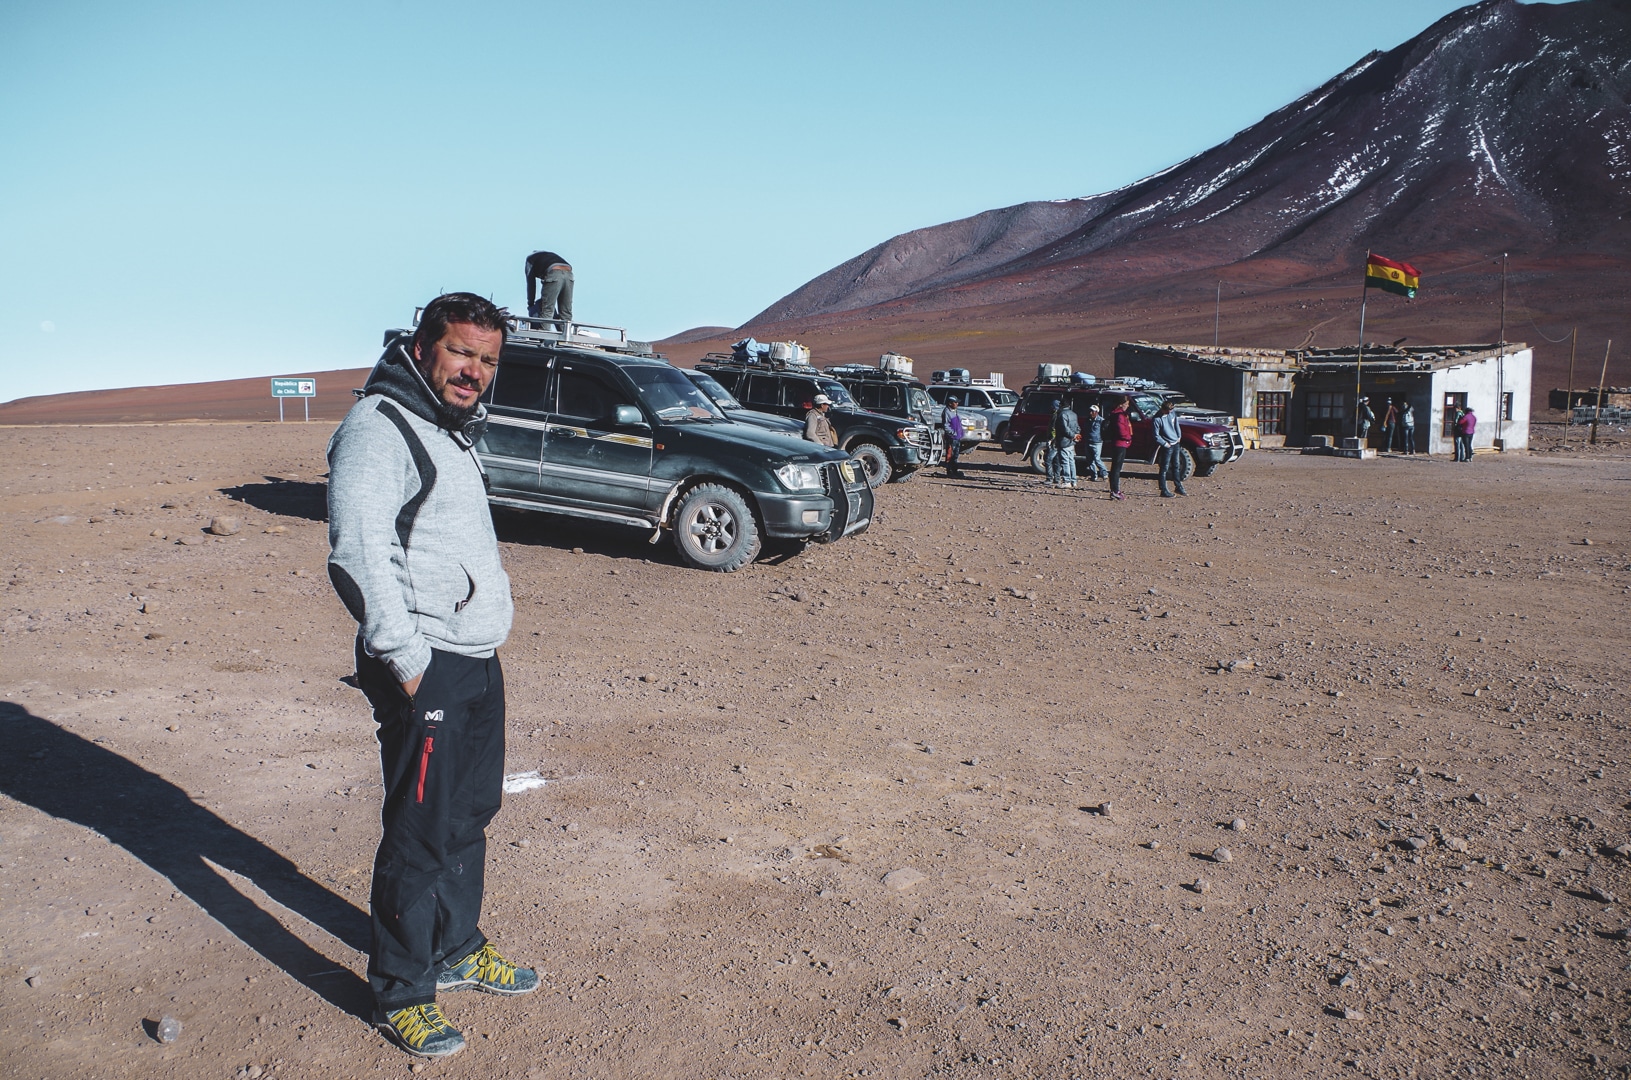 frontiere Hito Cajon en Bolivie guide pratique préparer son voyage